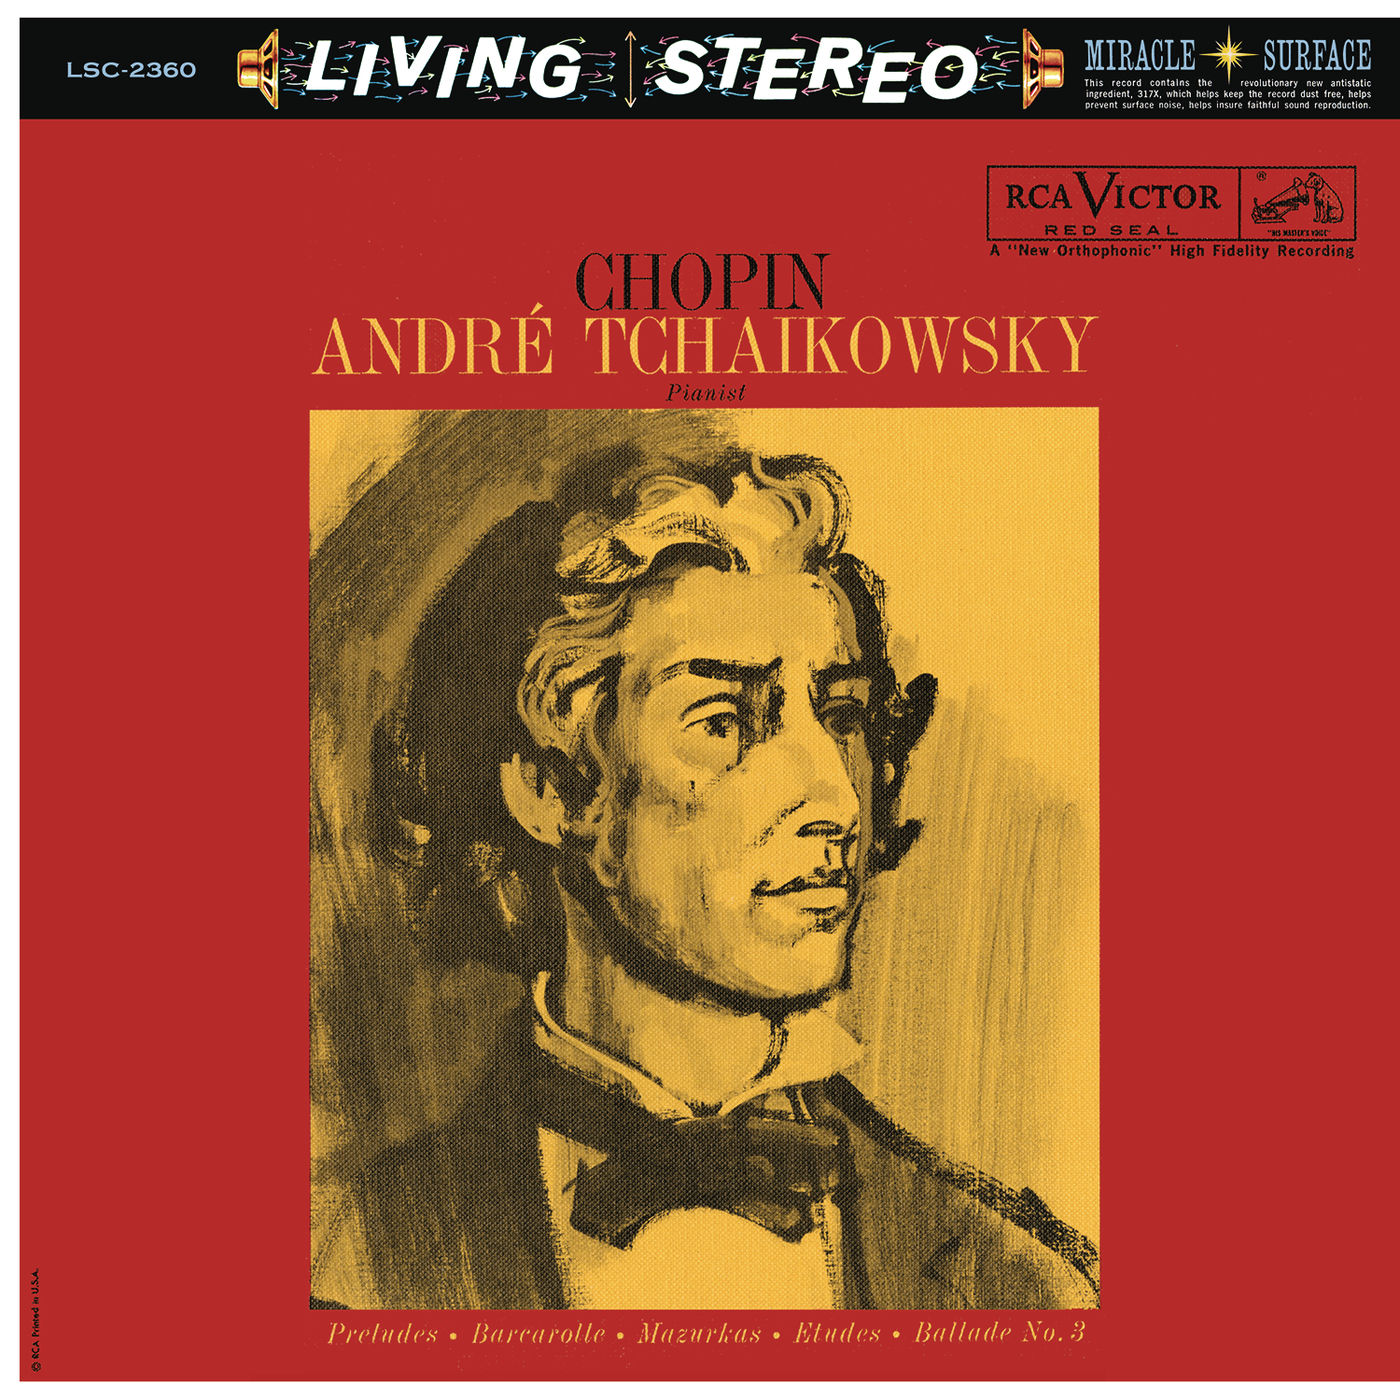 André Tchaikowsky – André Tchaikowsky plays Chopin